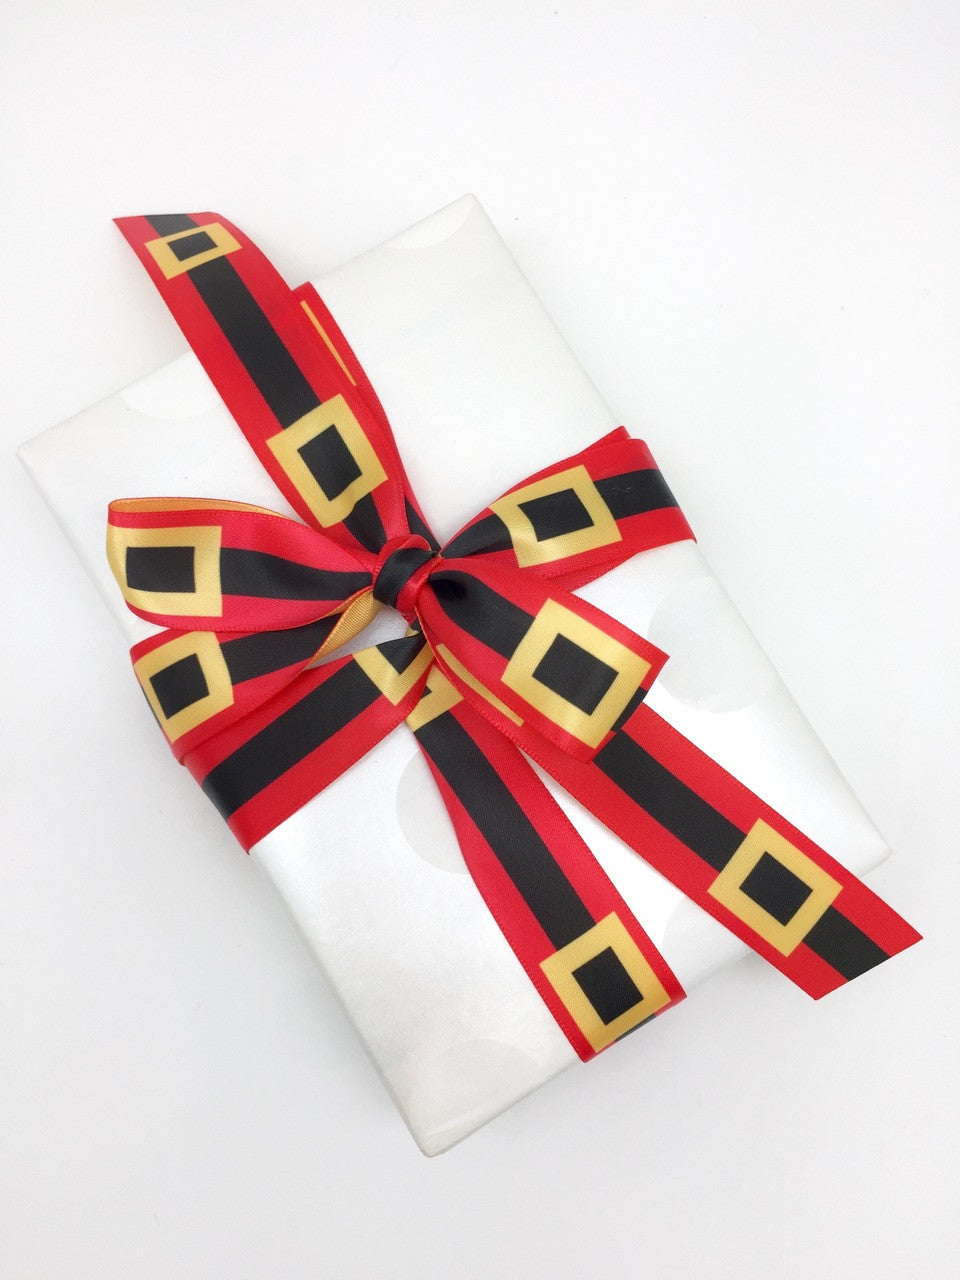 Tighten Santa's Belt around a gift to add some fun to the recipients day!